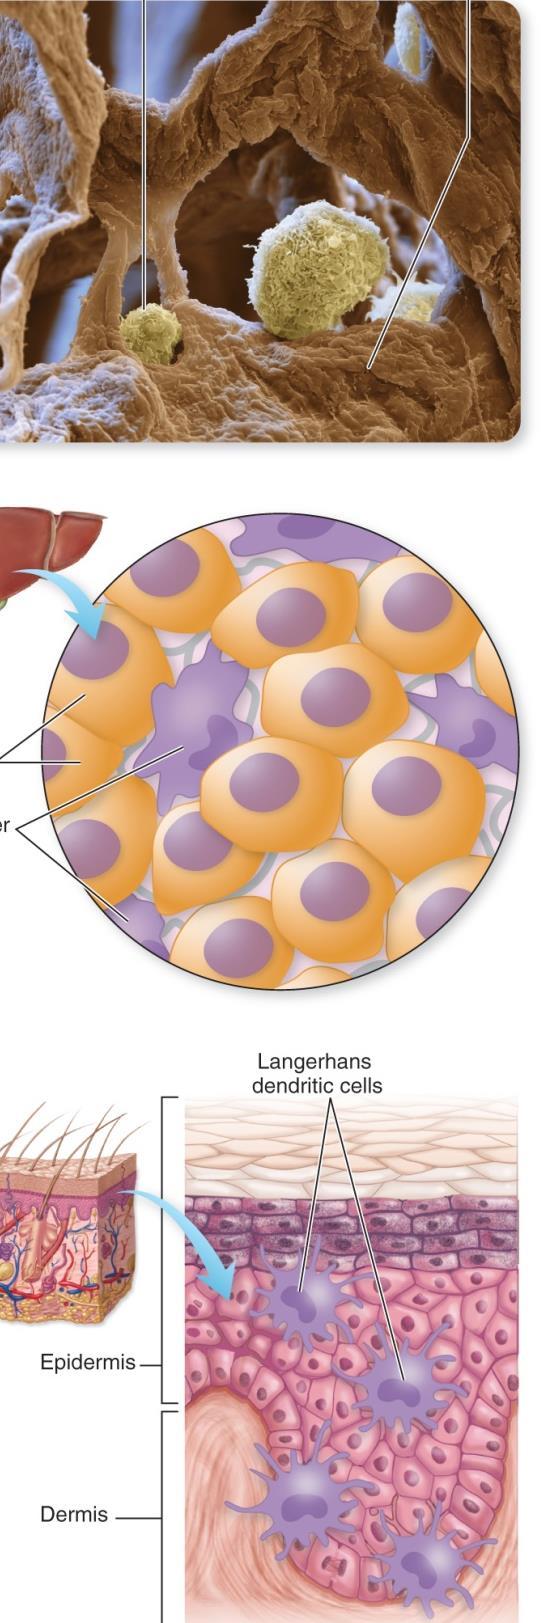 Phagocytosis: Cornerstone of Inflammation and Specific Immunity Neutrophils (part of PMNs): General purpose phagocytes Early inflammatory response to